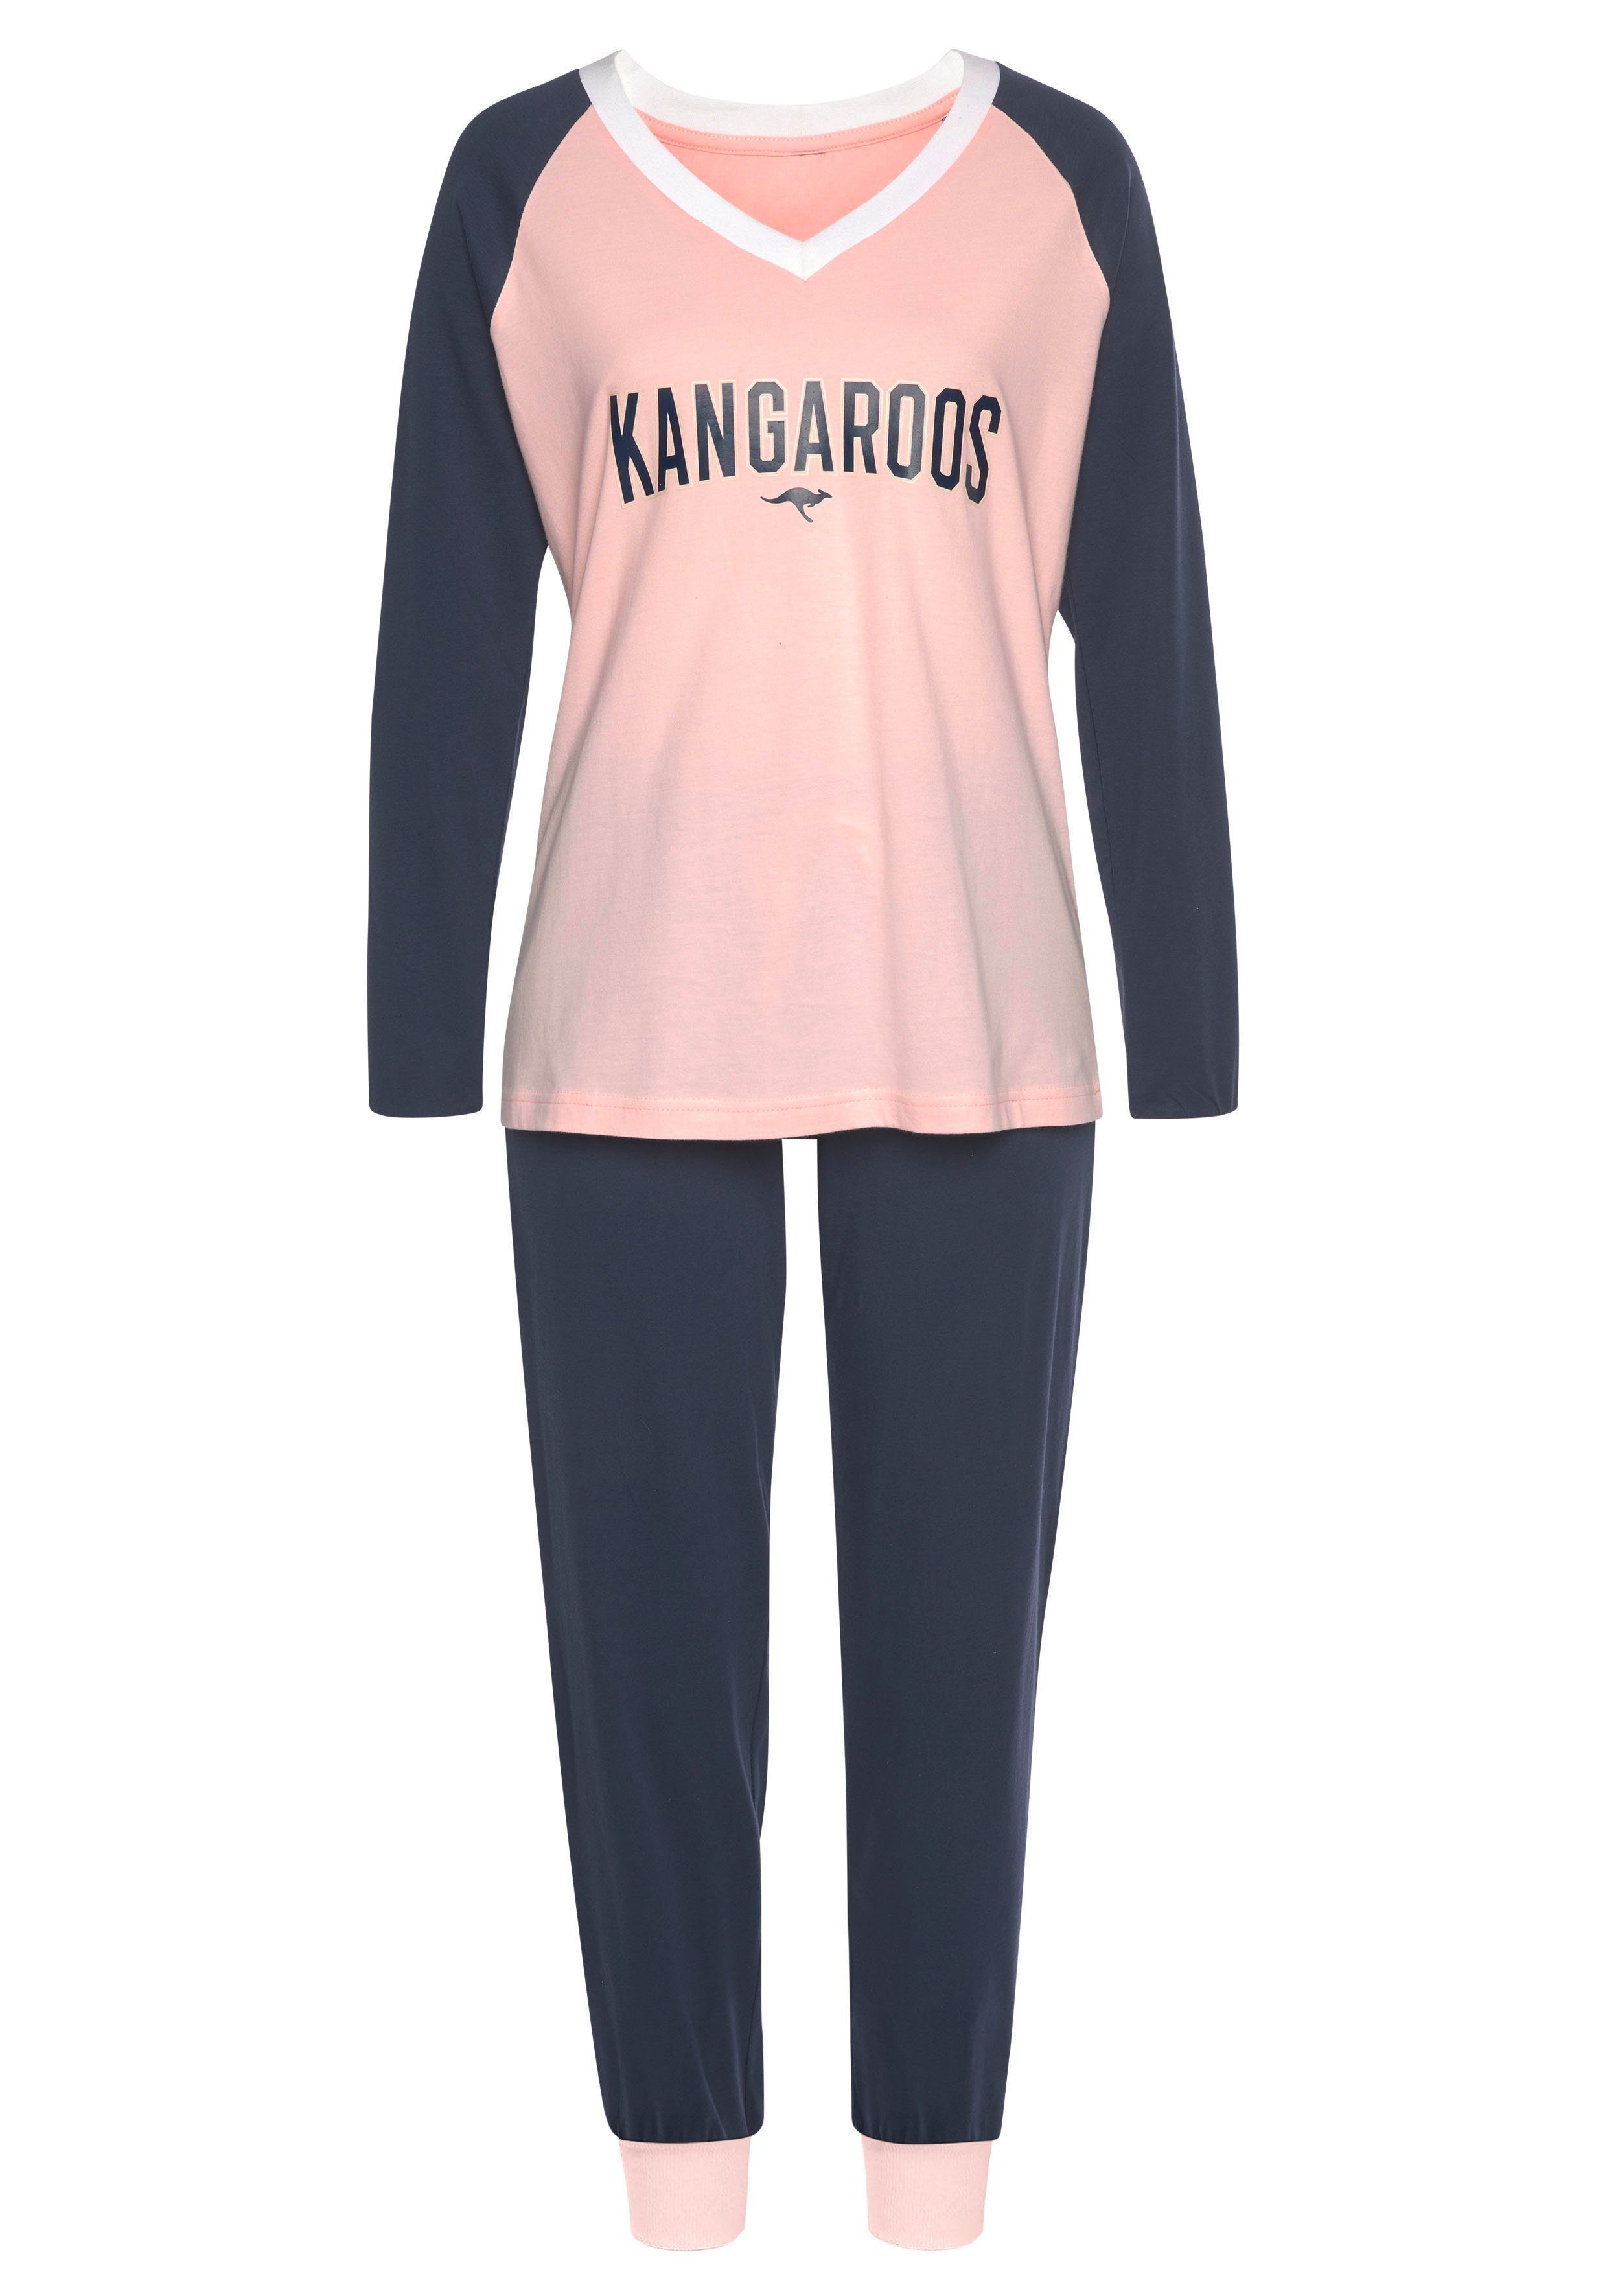 Raglanärmeln tlg., kontrastfarbenen 1 (2 mit KangaROOS Stück) rosa-dunkelblau Pyjama